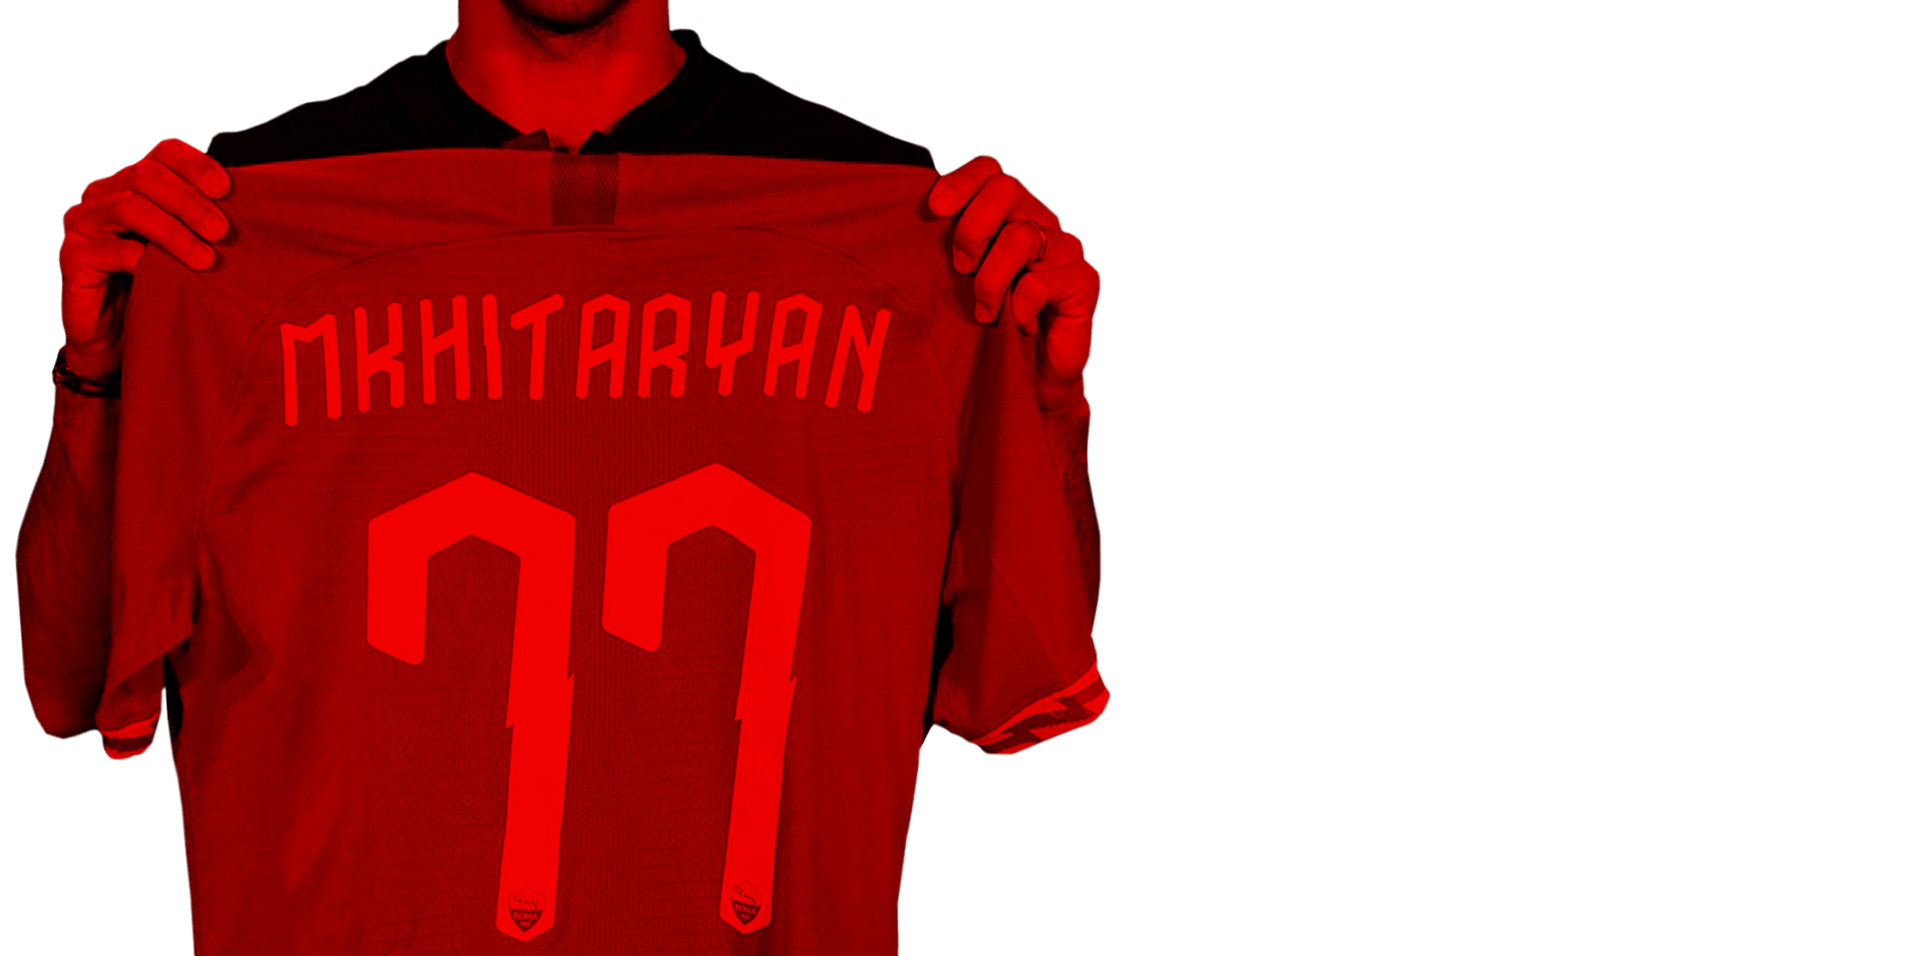 Why is Henrikh Mkhitaryan wearing number 77 at Arsenal in Europa